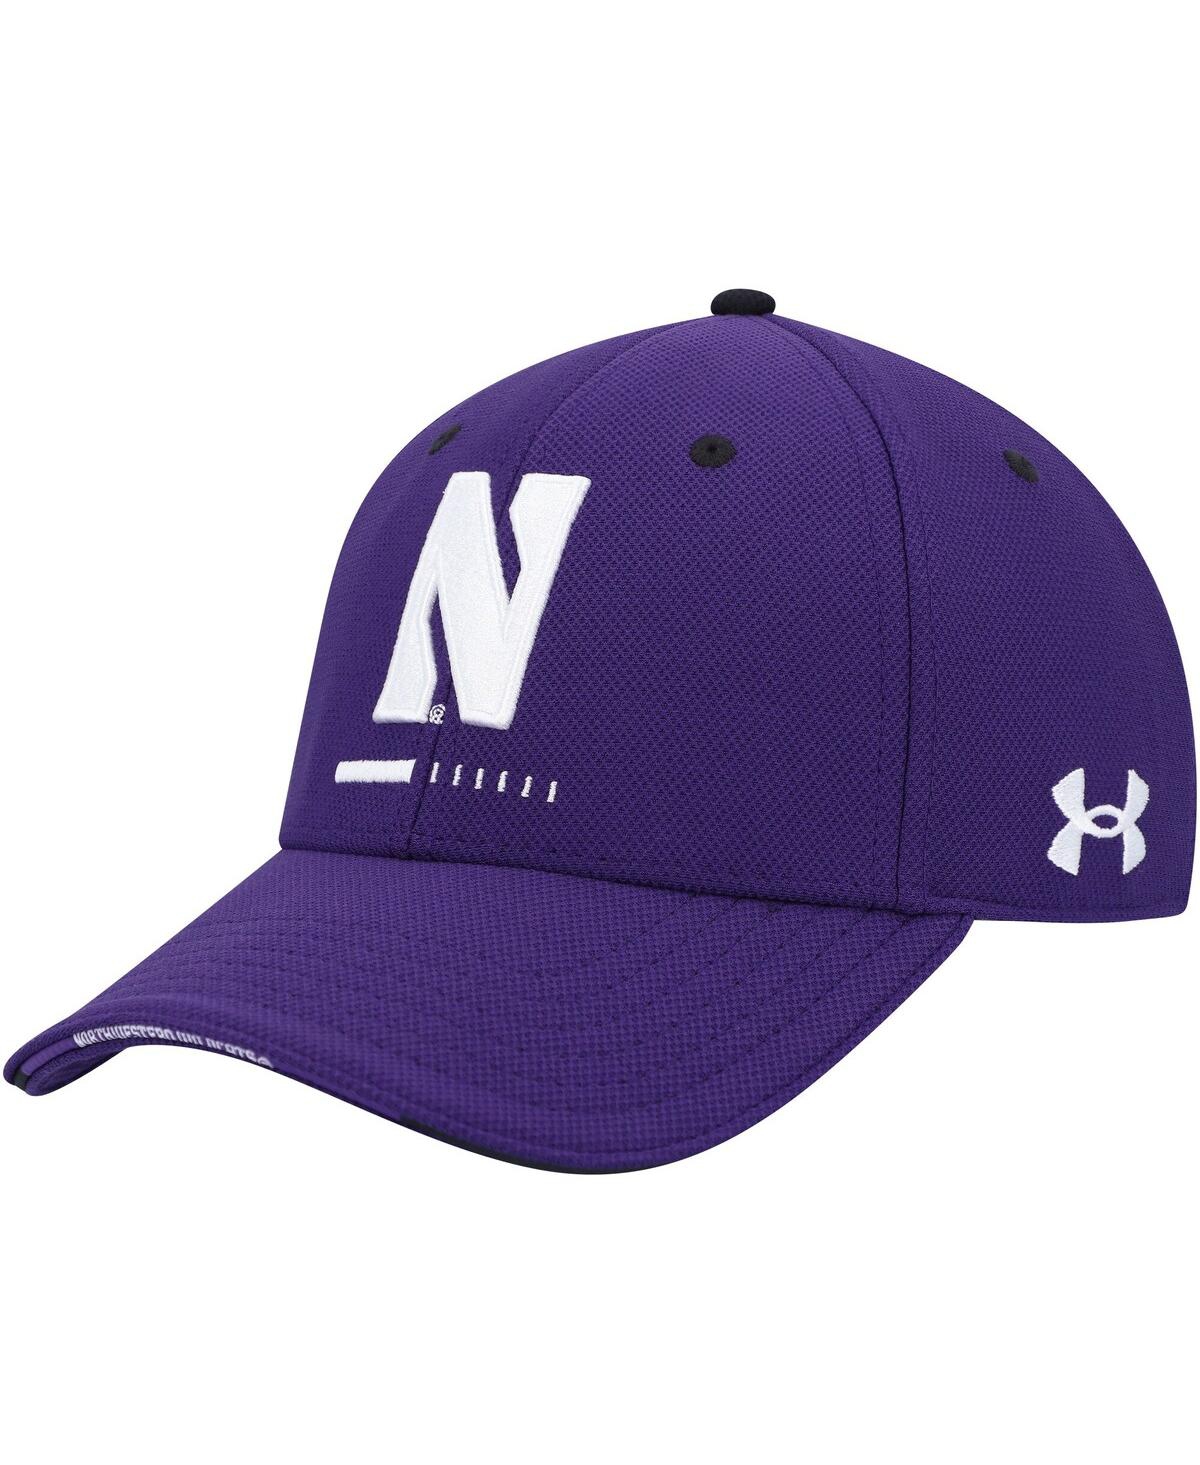 Shop Under Armour Men's  Purple Northwestern Wildcats Blitzing Accent Performance Adjustable Hat